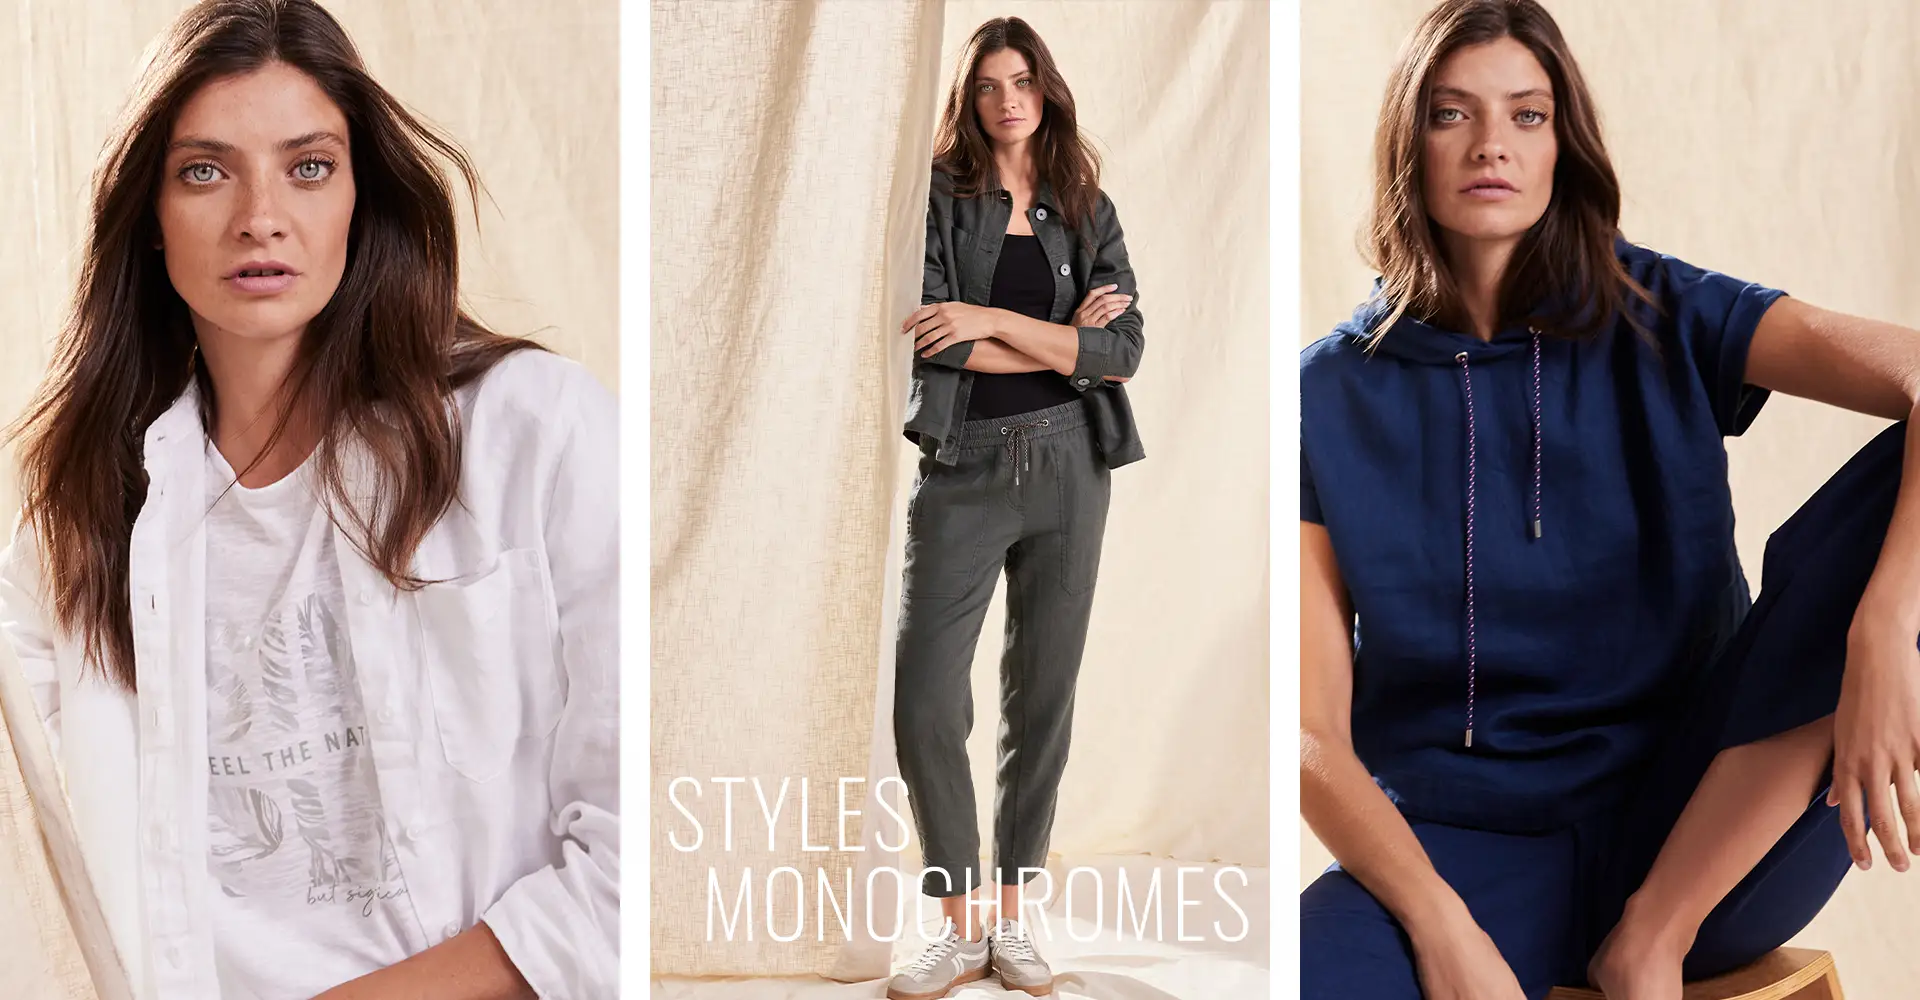 Styles monochromes